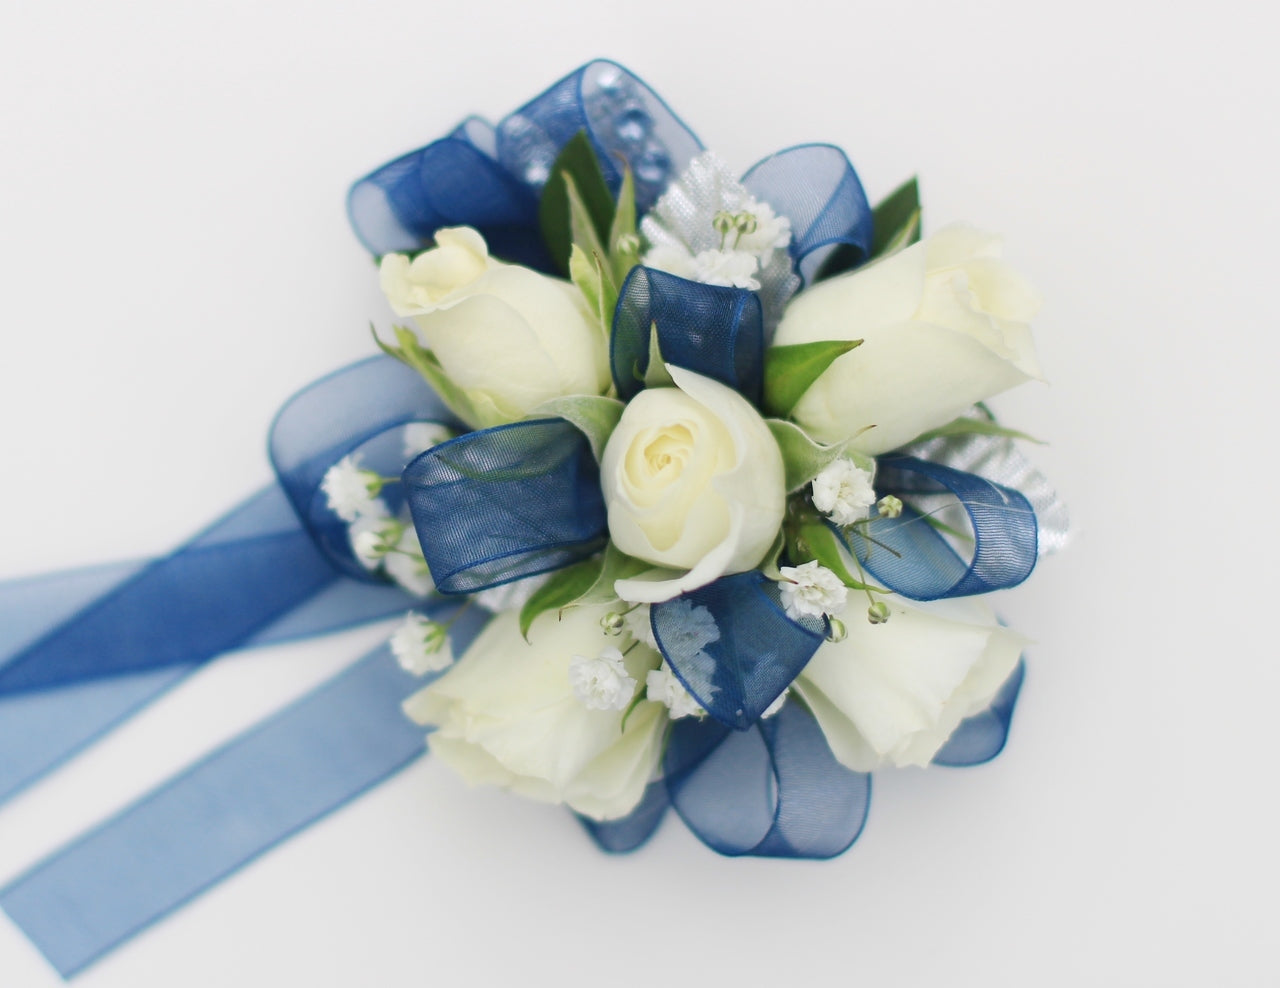 Wrist Corsage - White Rose w/ Blue